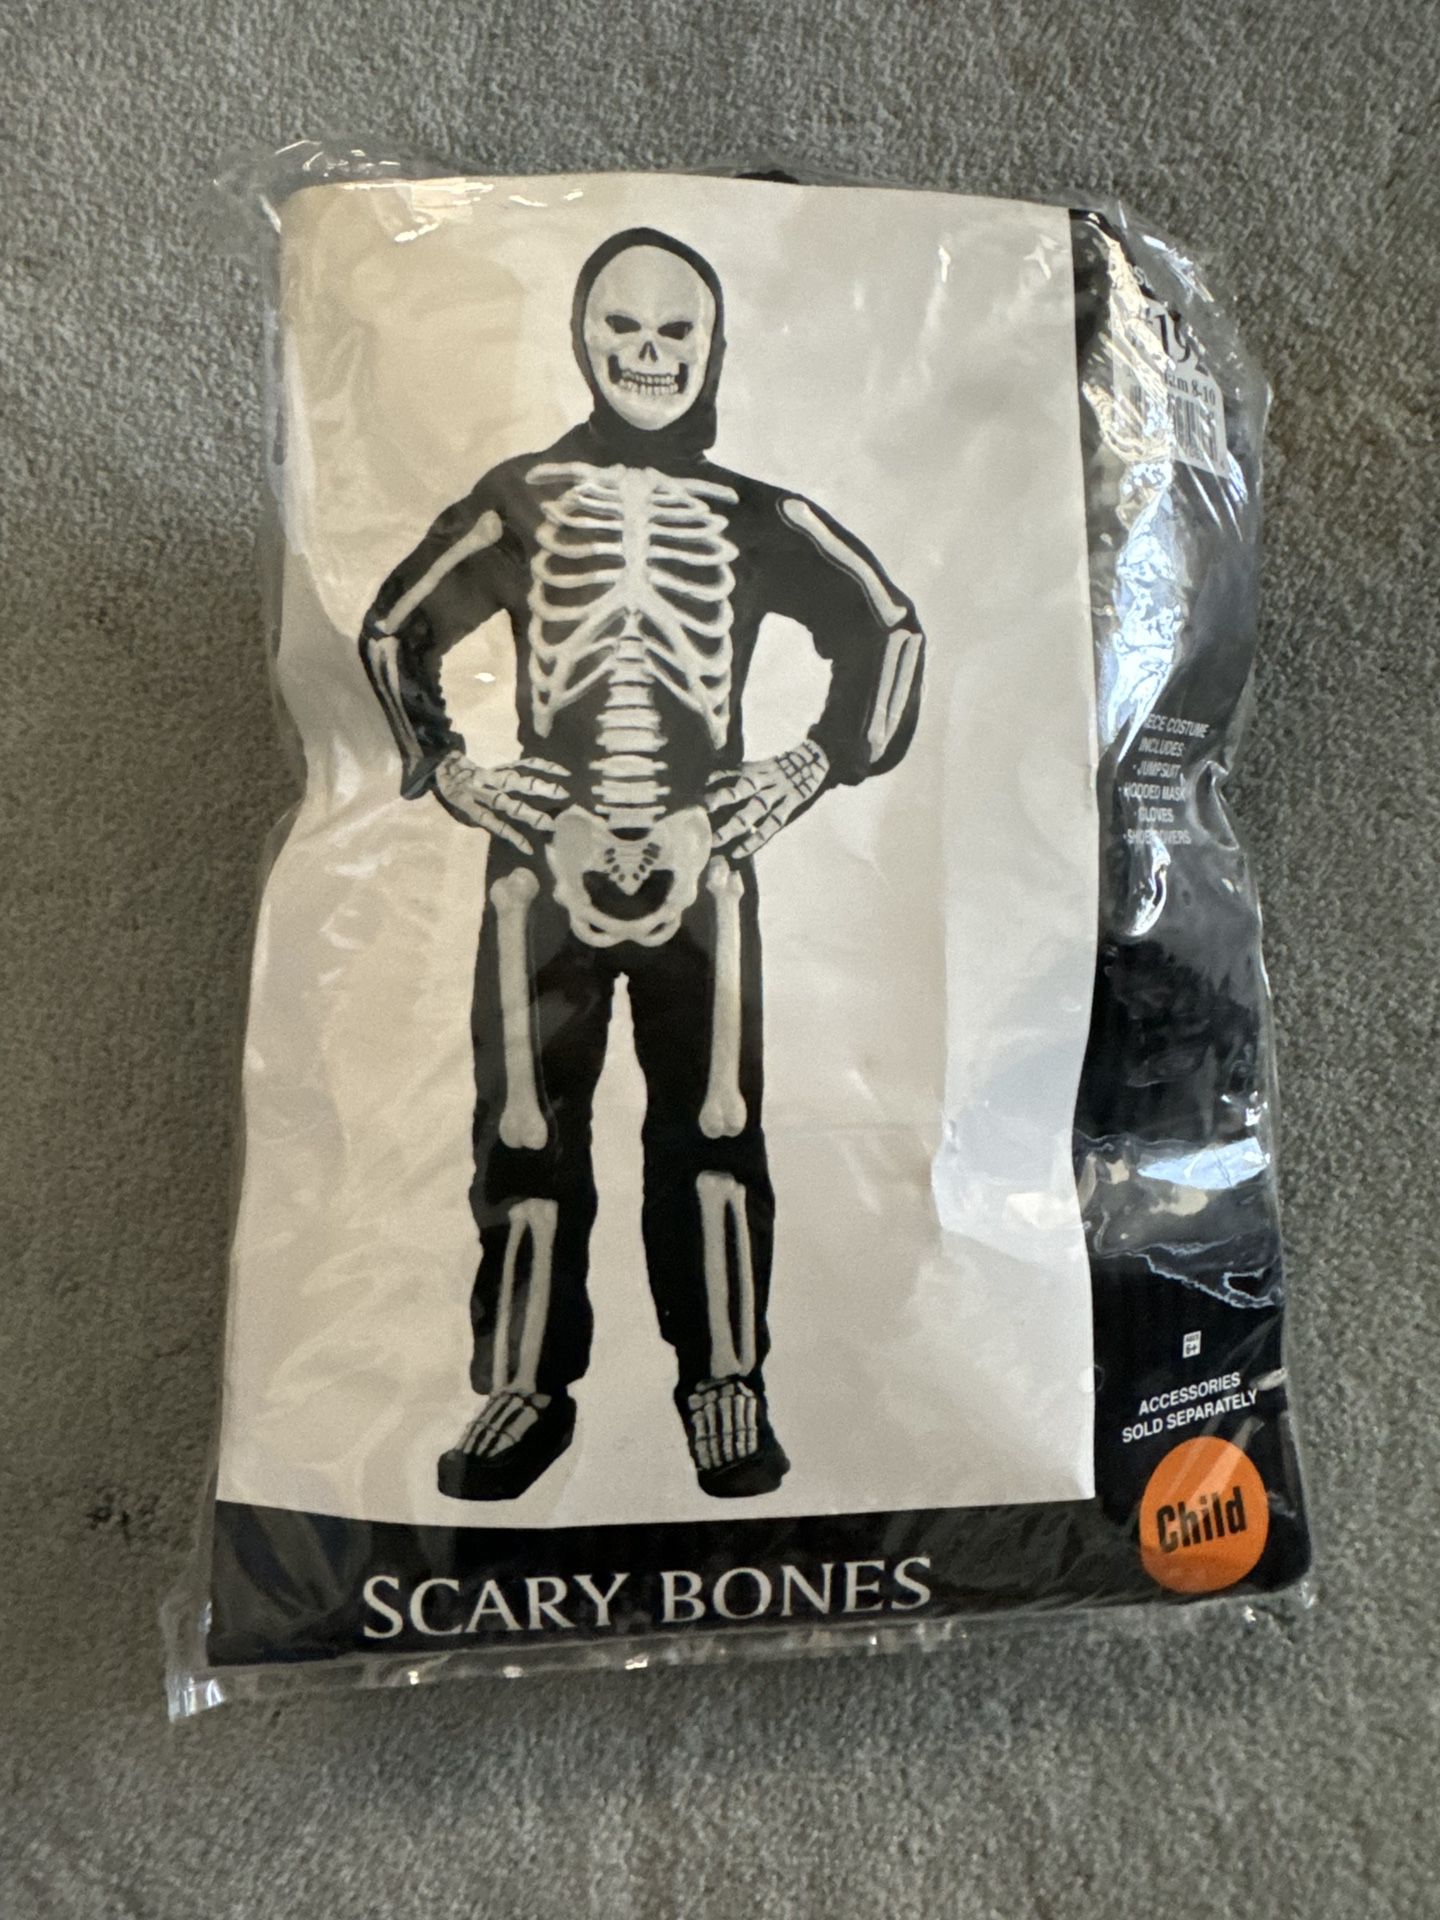 Kids Skeleton Costume